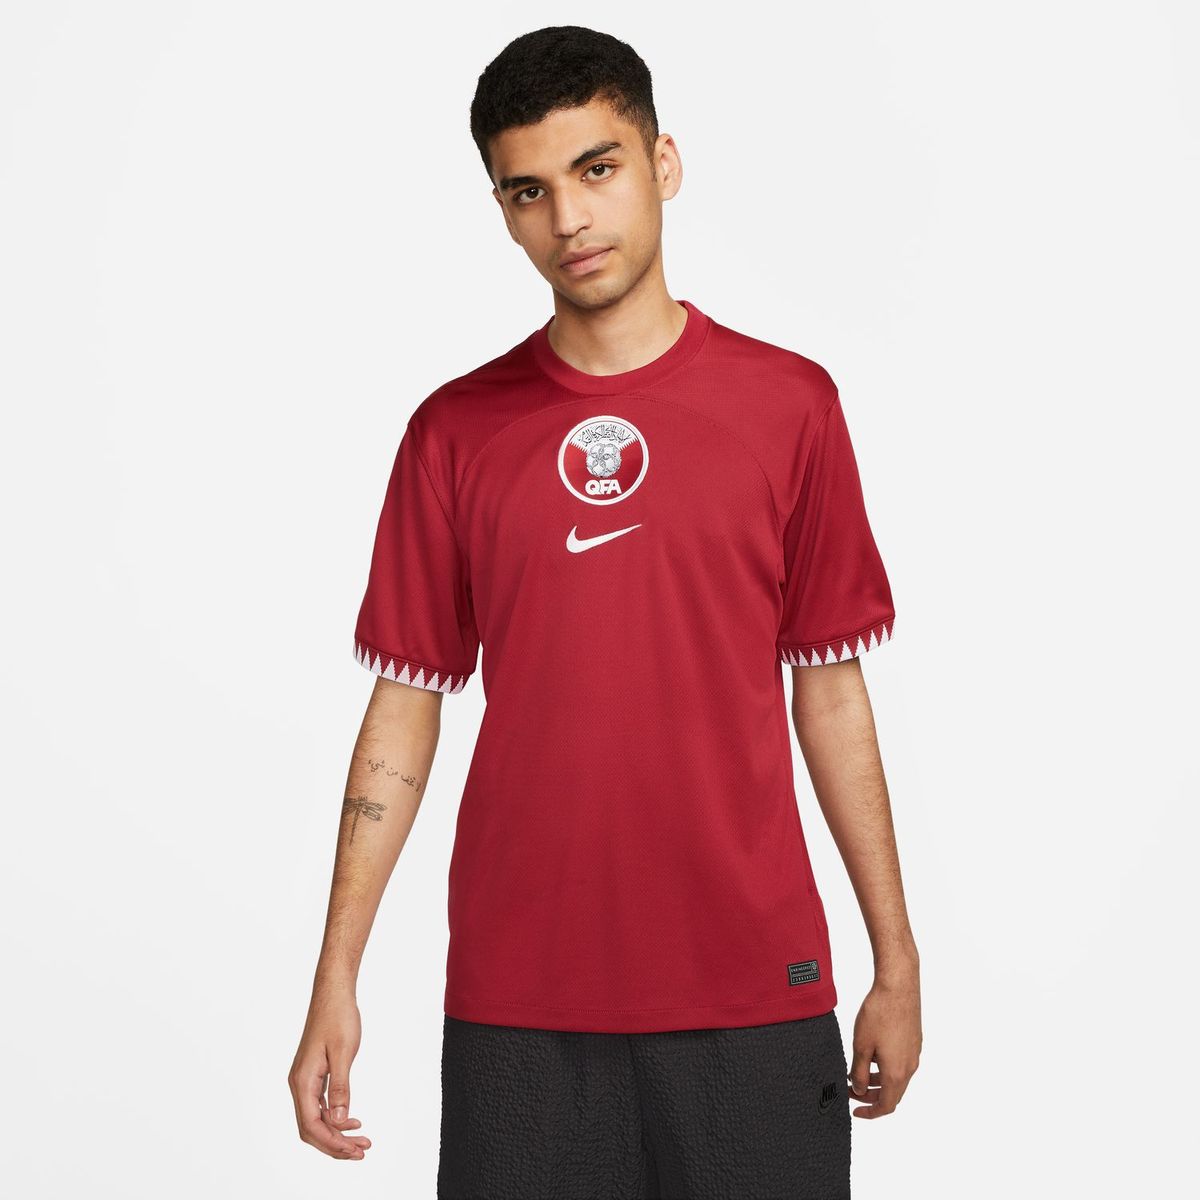 Nike Katar Heim Herren Trikot